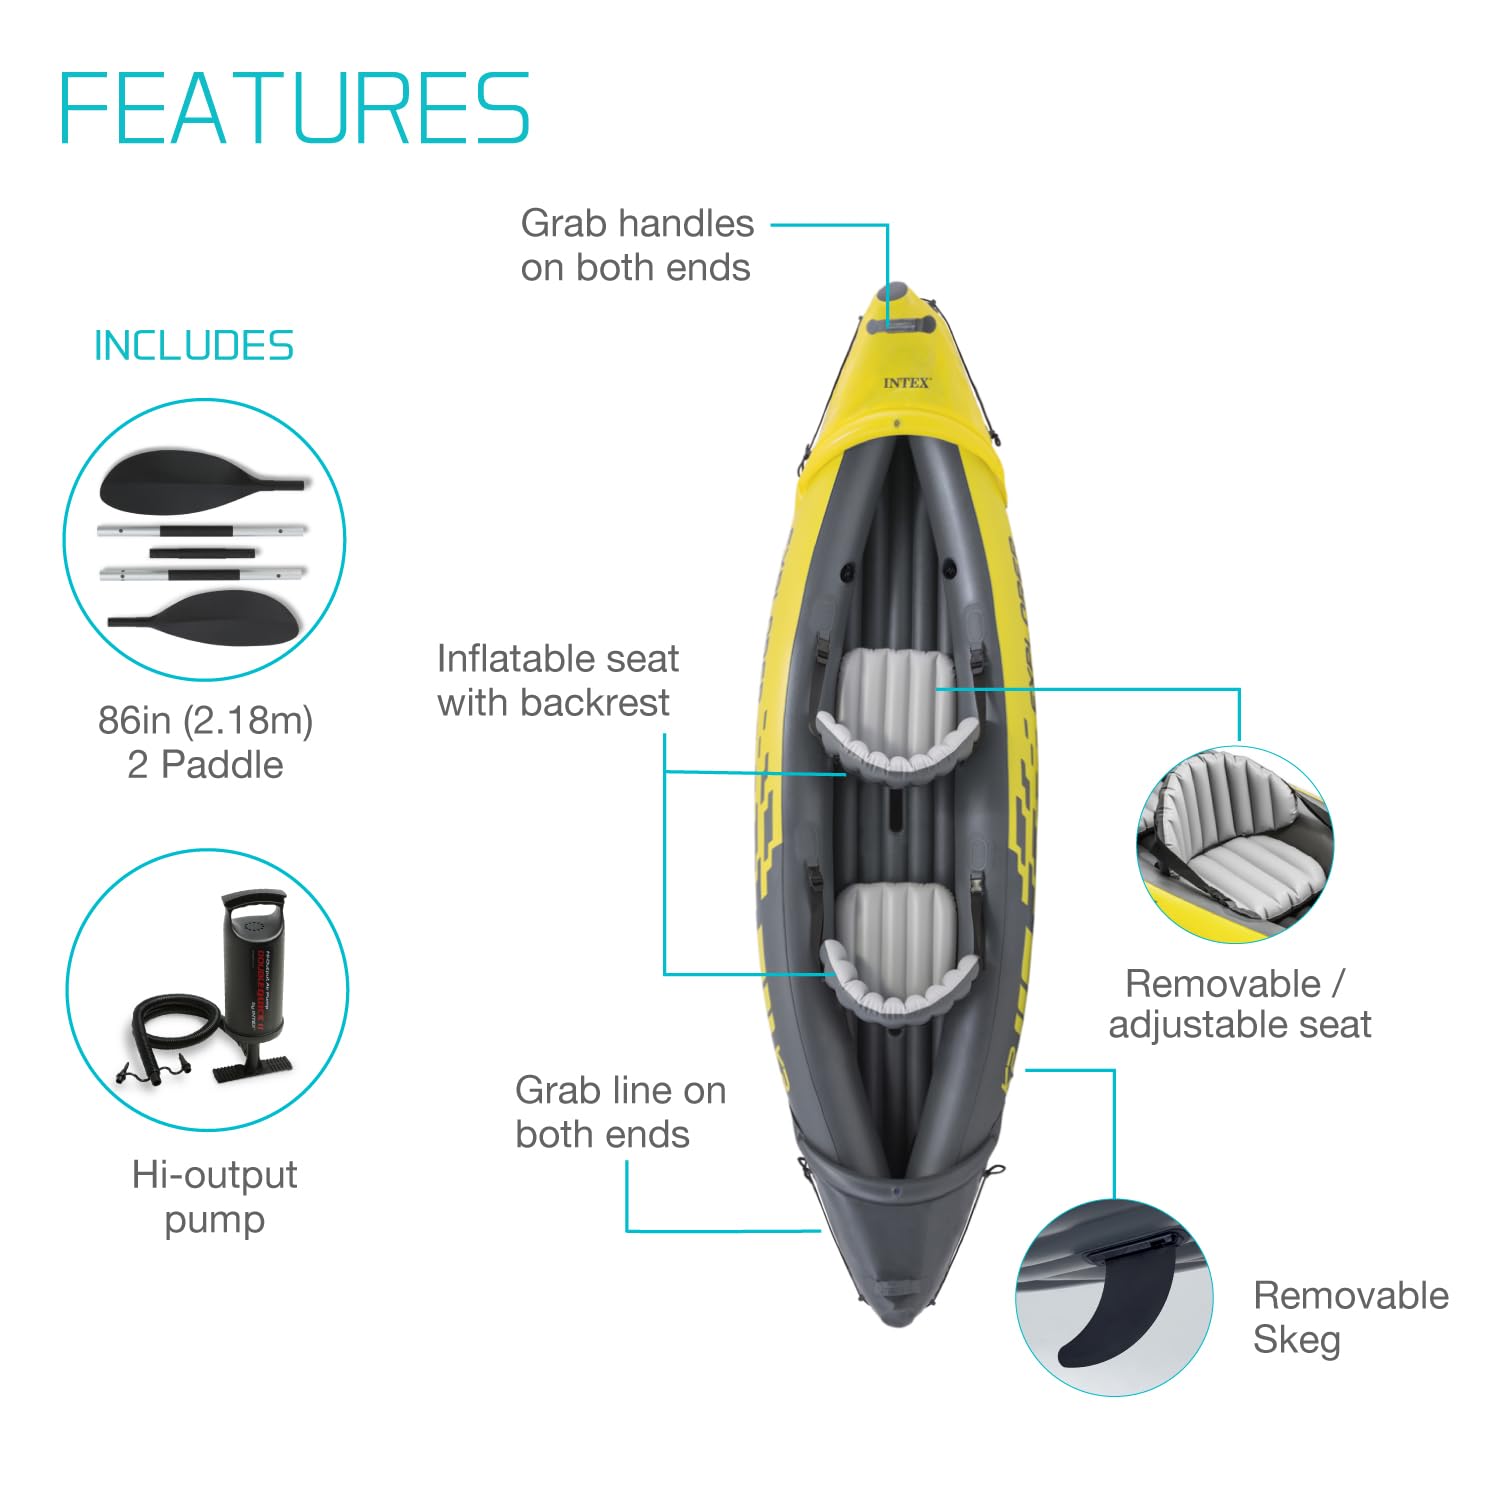 Intex Explorer K2 Kayak, 2-Person Inflatable Kayak Set with Two Aluminum Oars, Manual & Electric Pumps, Yellow